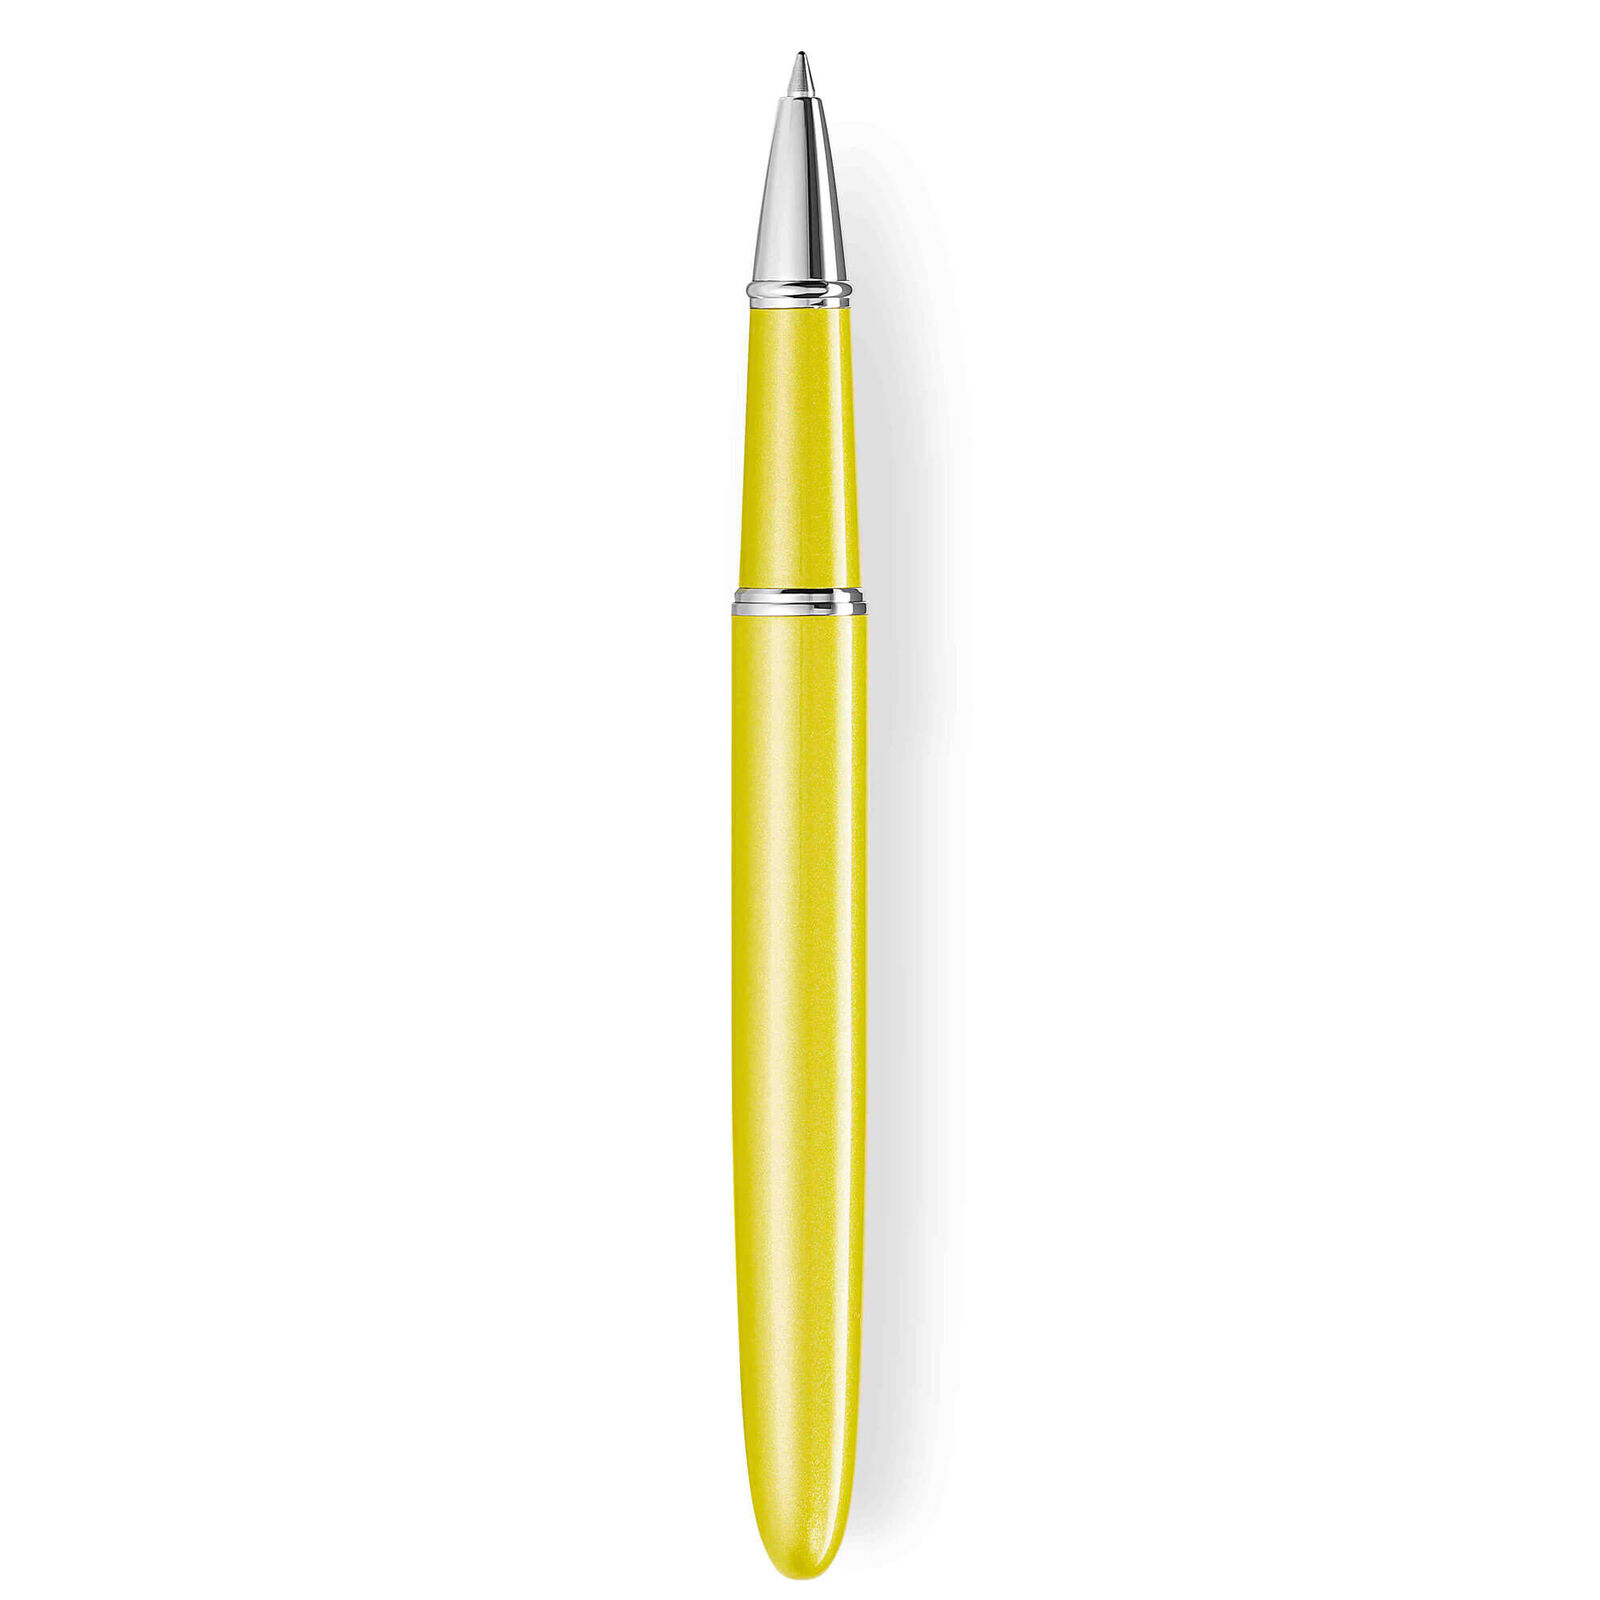 Tibaldi by Montegrappa Rollerball Pen D26 Shiny Yellow Finish Brass Body 123-RB